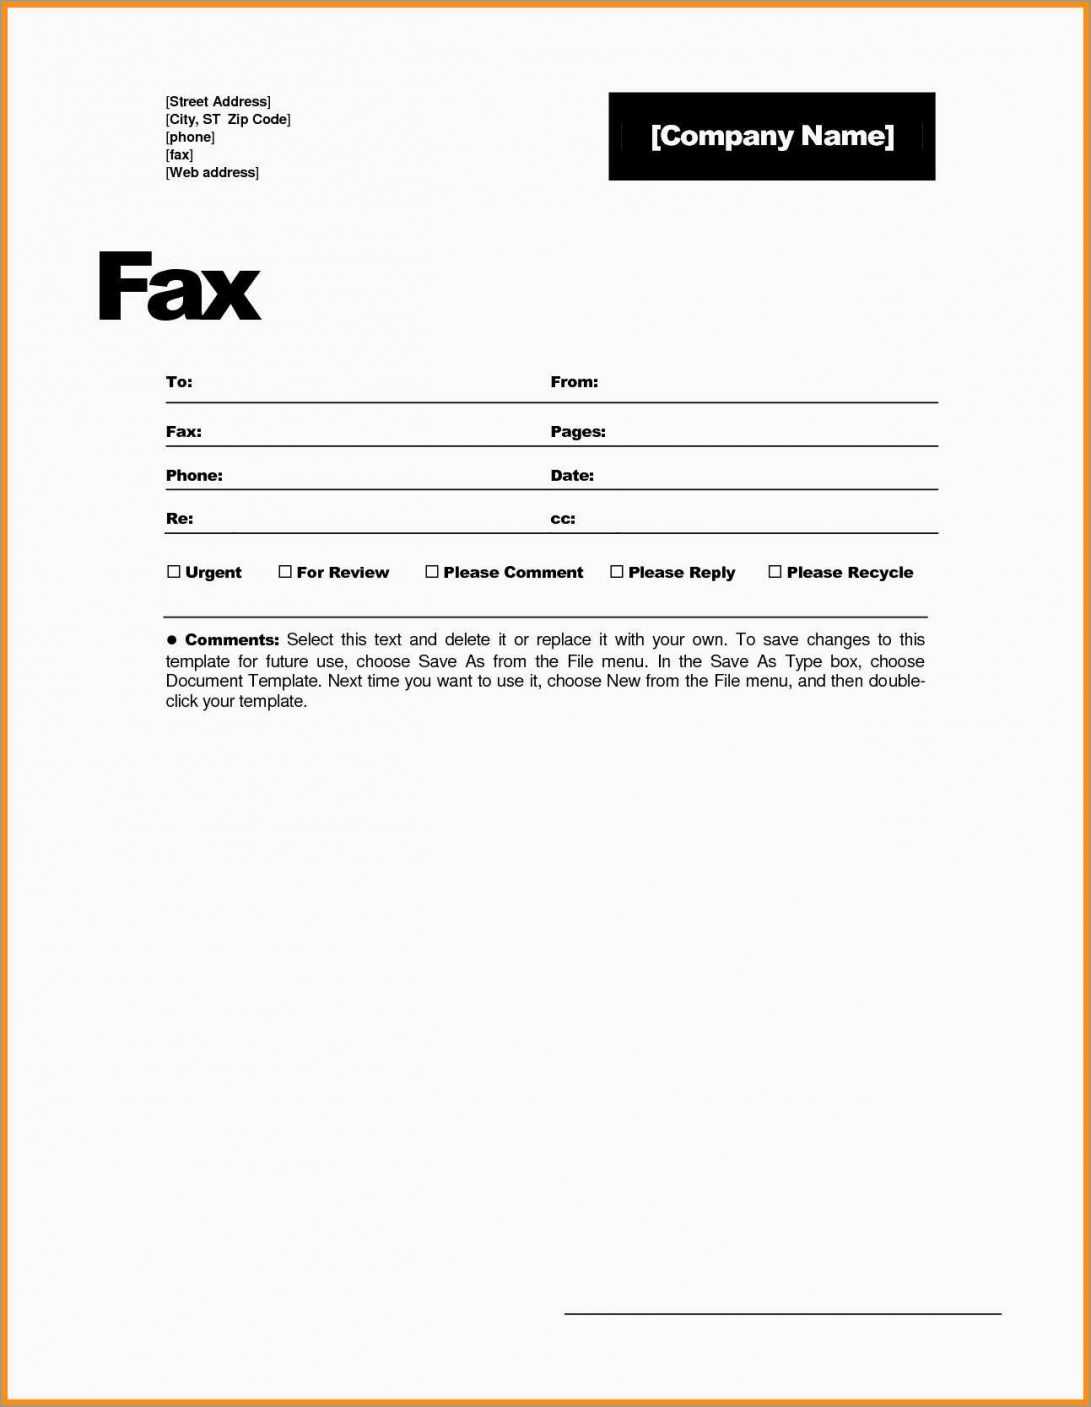 Fax Cover Sheet Template Word Blank Balance Sheets Business With Fax Cover Sheet Template Word 2010